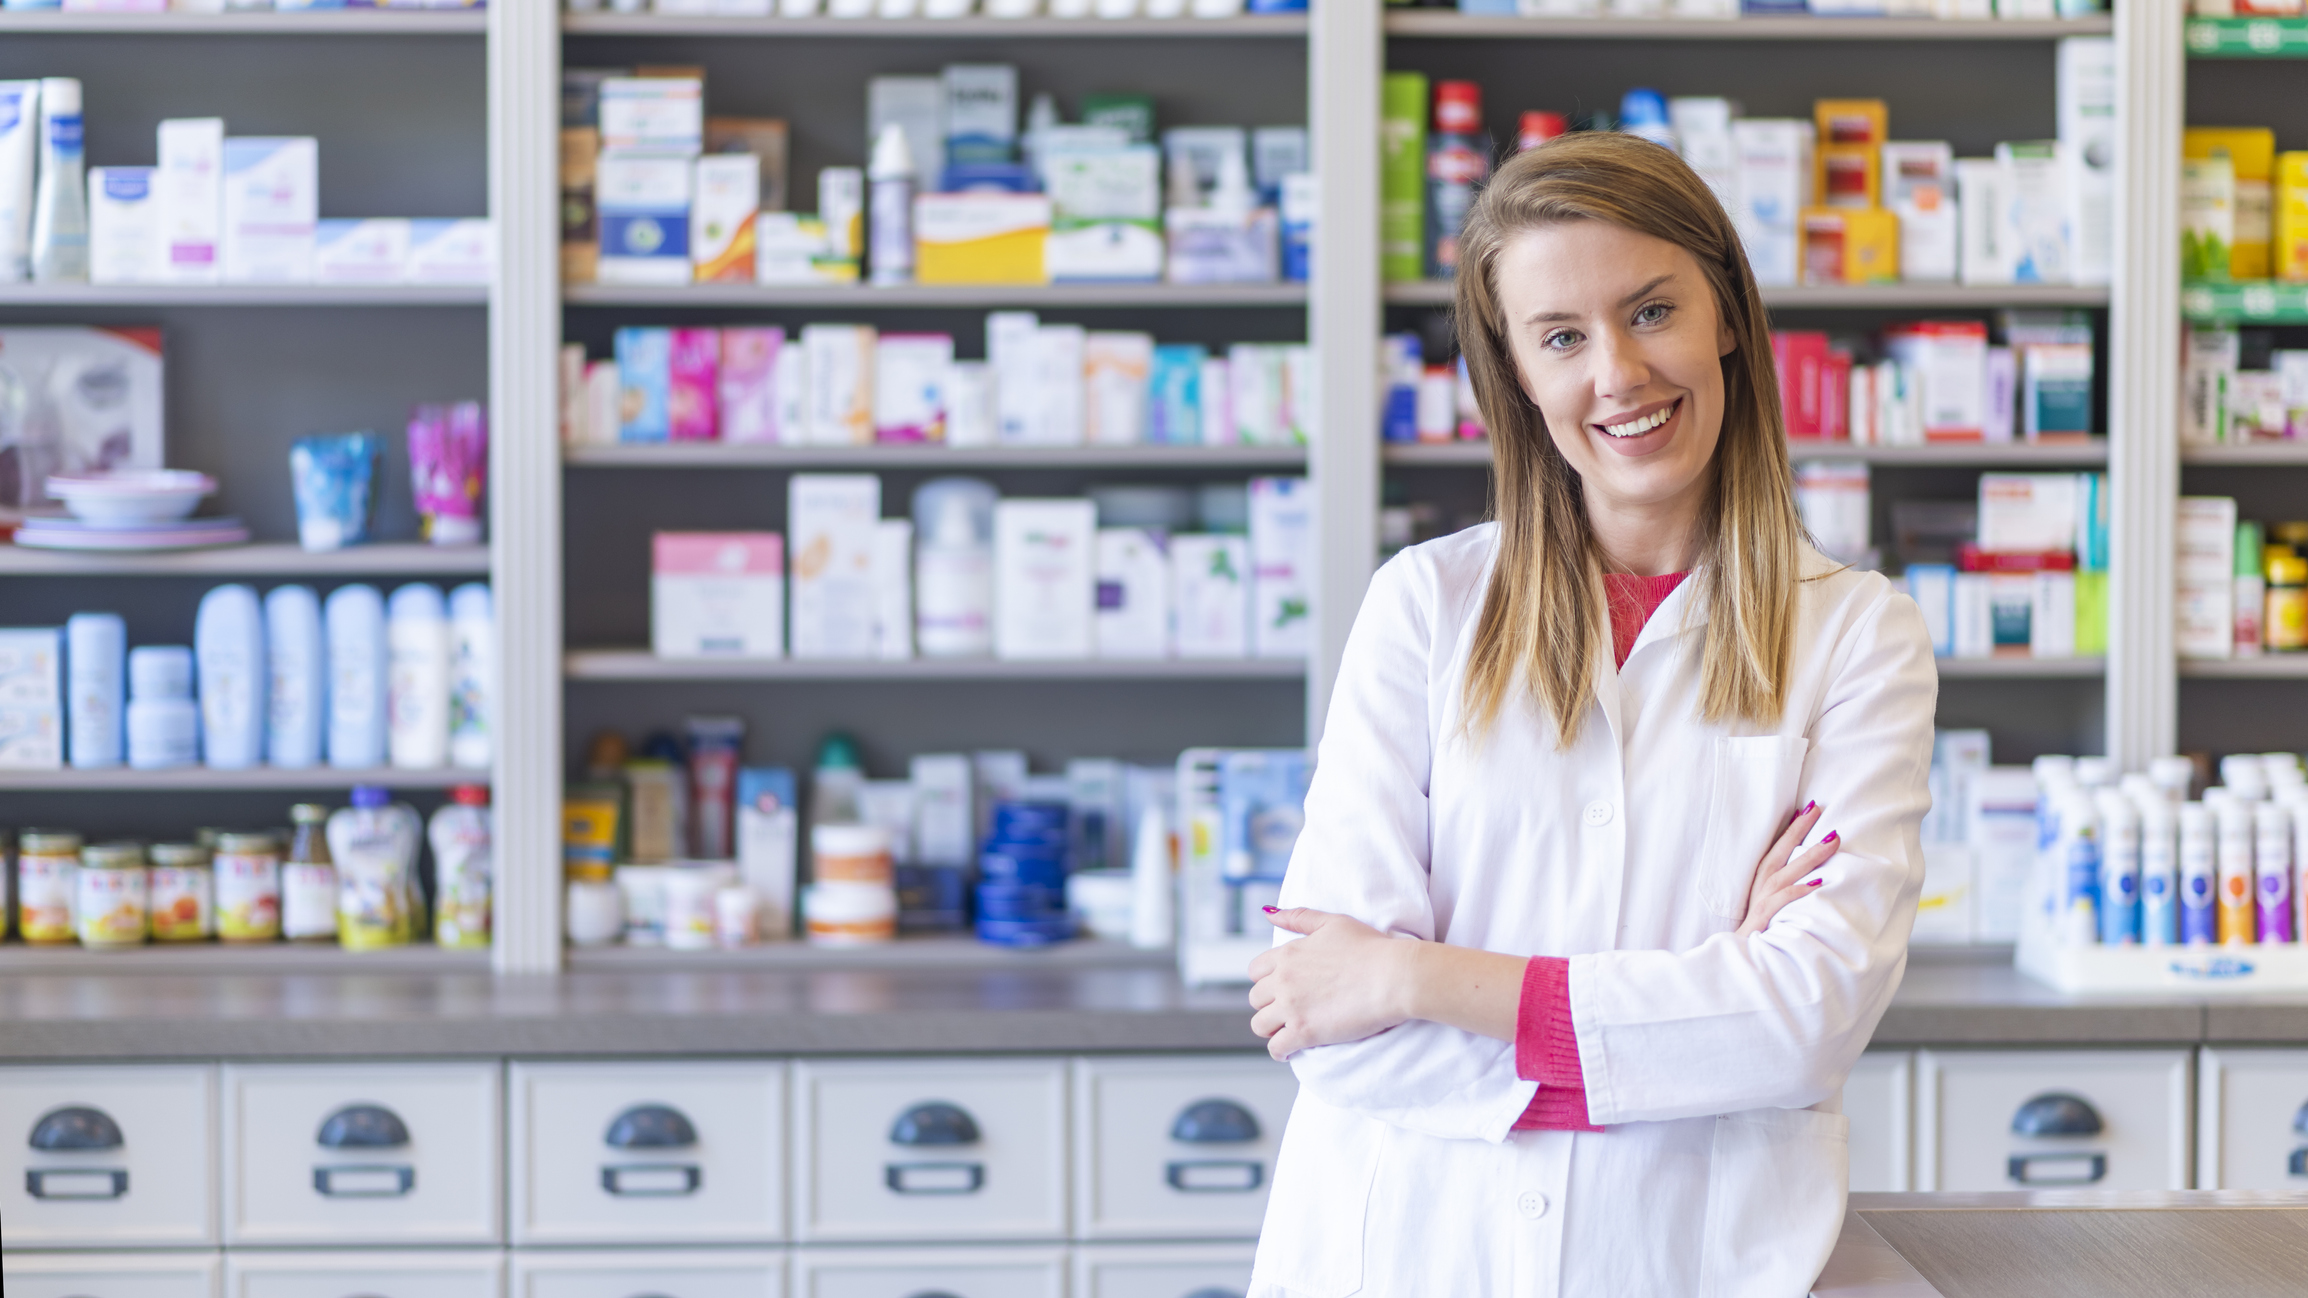 woman in labcoat standing in drugstore / pharmacy